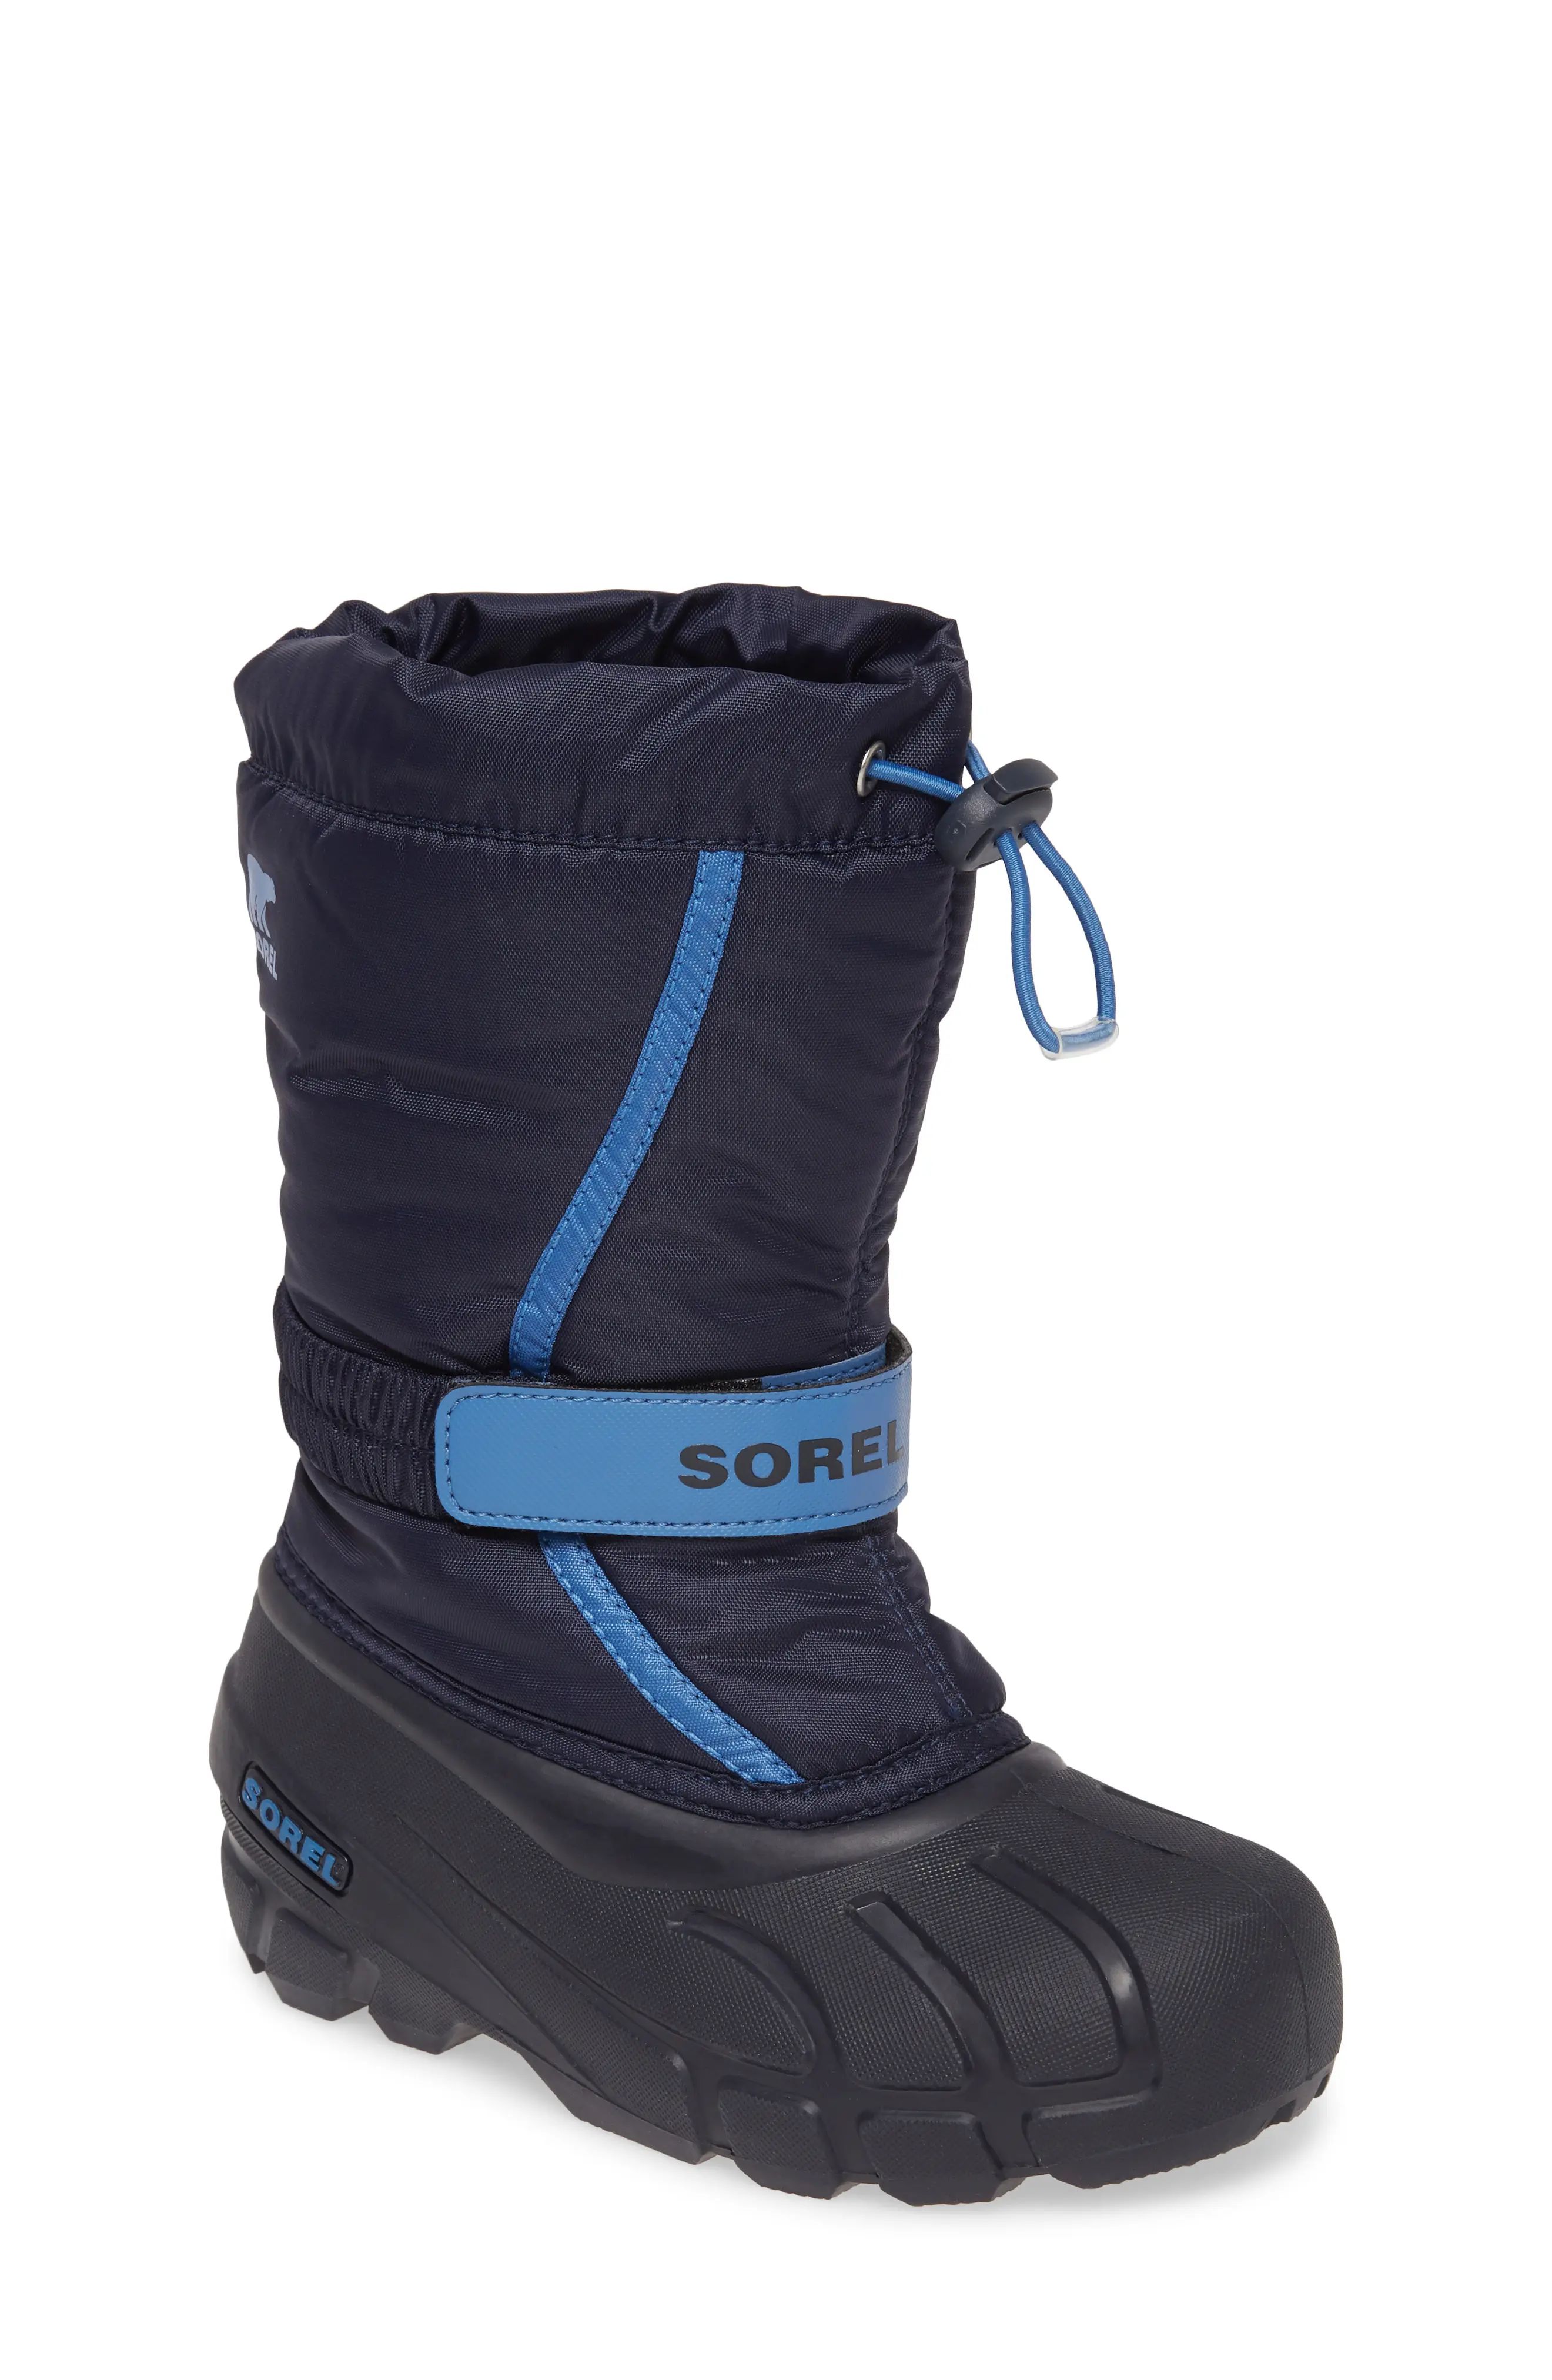 Toddler Sorel Flurry Weather Resistant Snow Boot, Size 3 M - Blue | Nordstrom